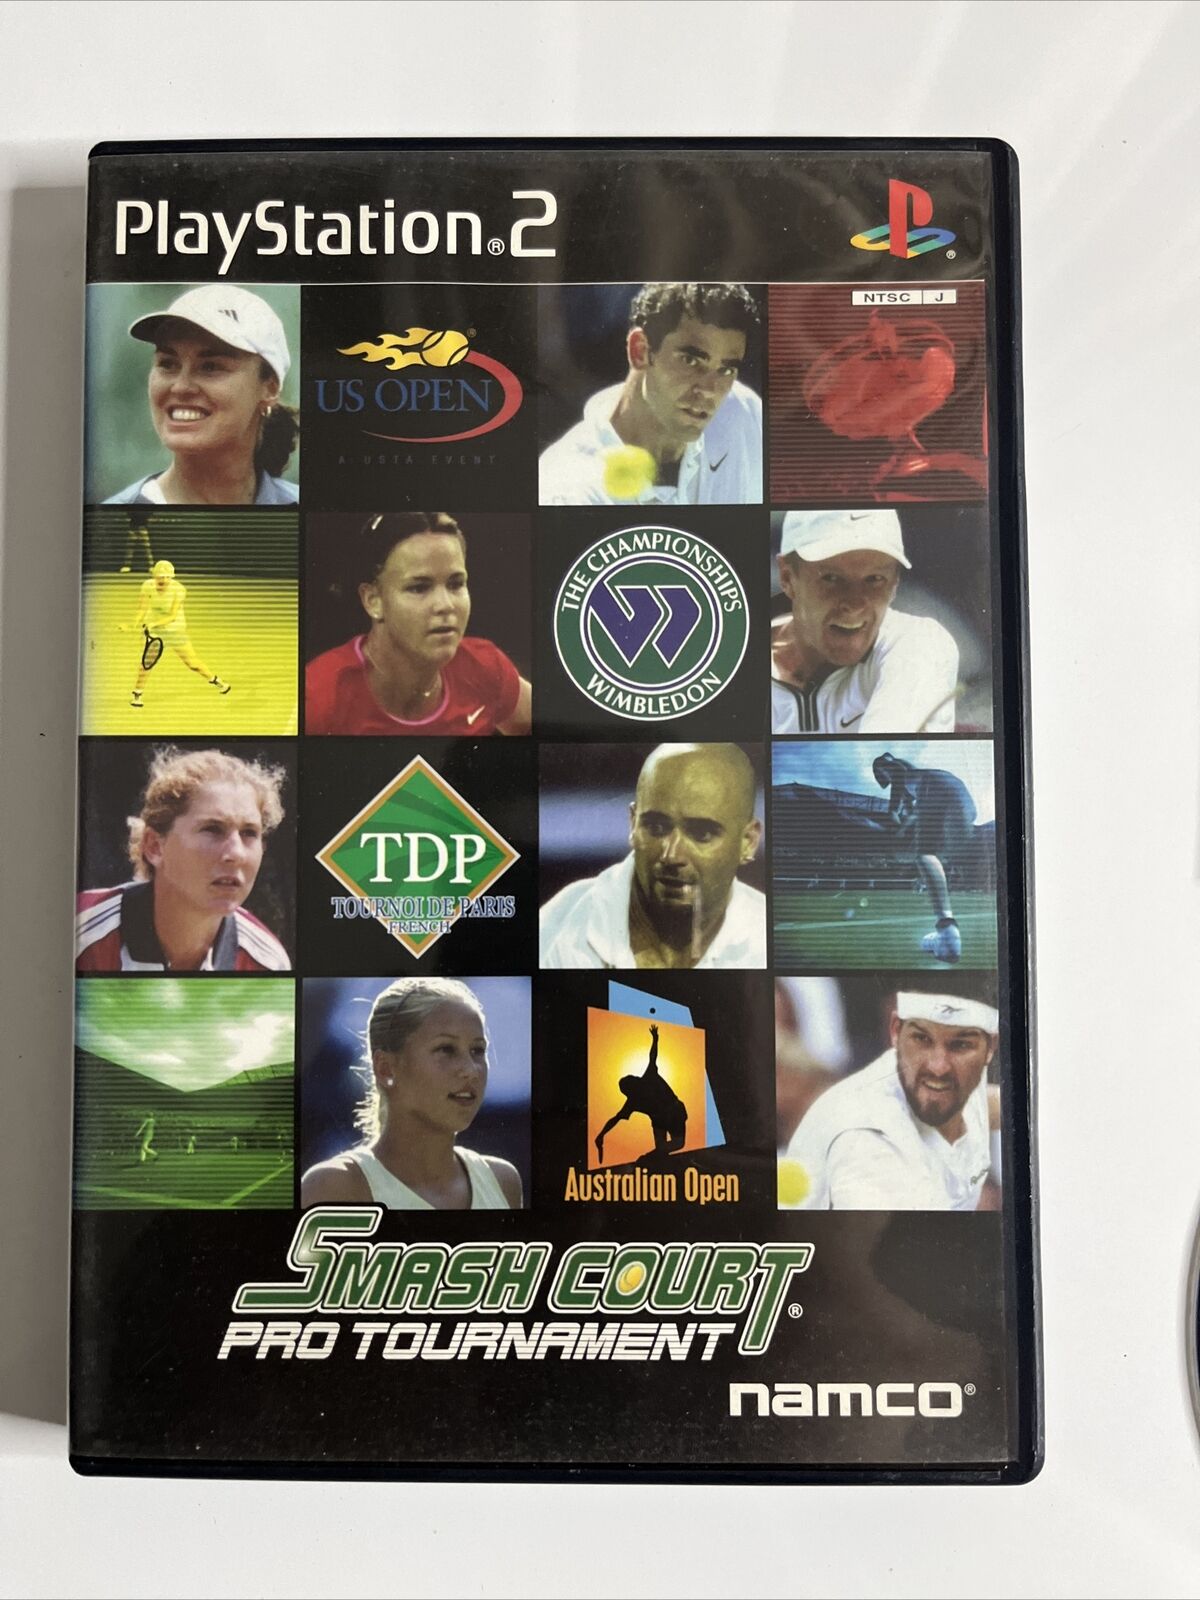 Smash Court Pro Tournament PS2 Sony PlayStation NTSC-J JAPAN Tennis Complete